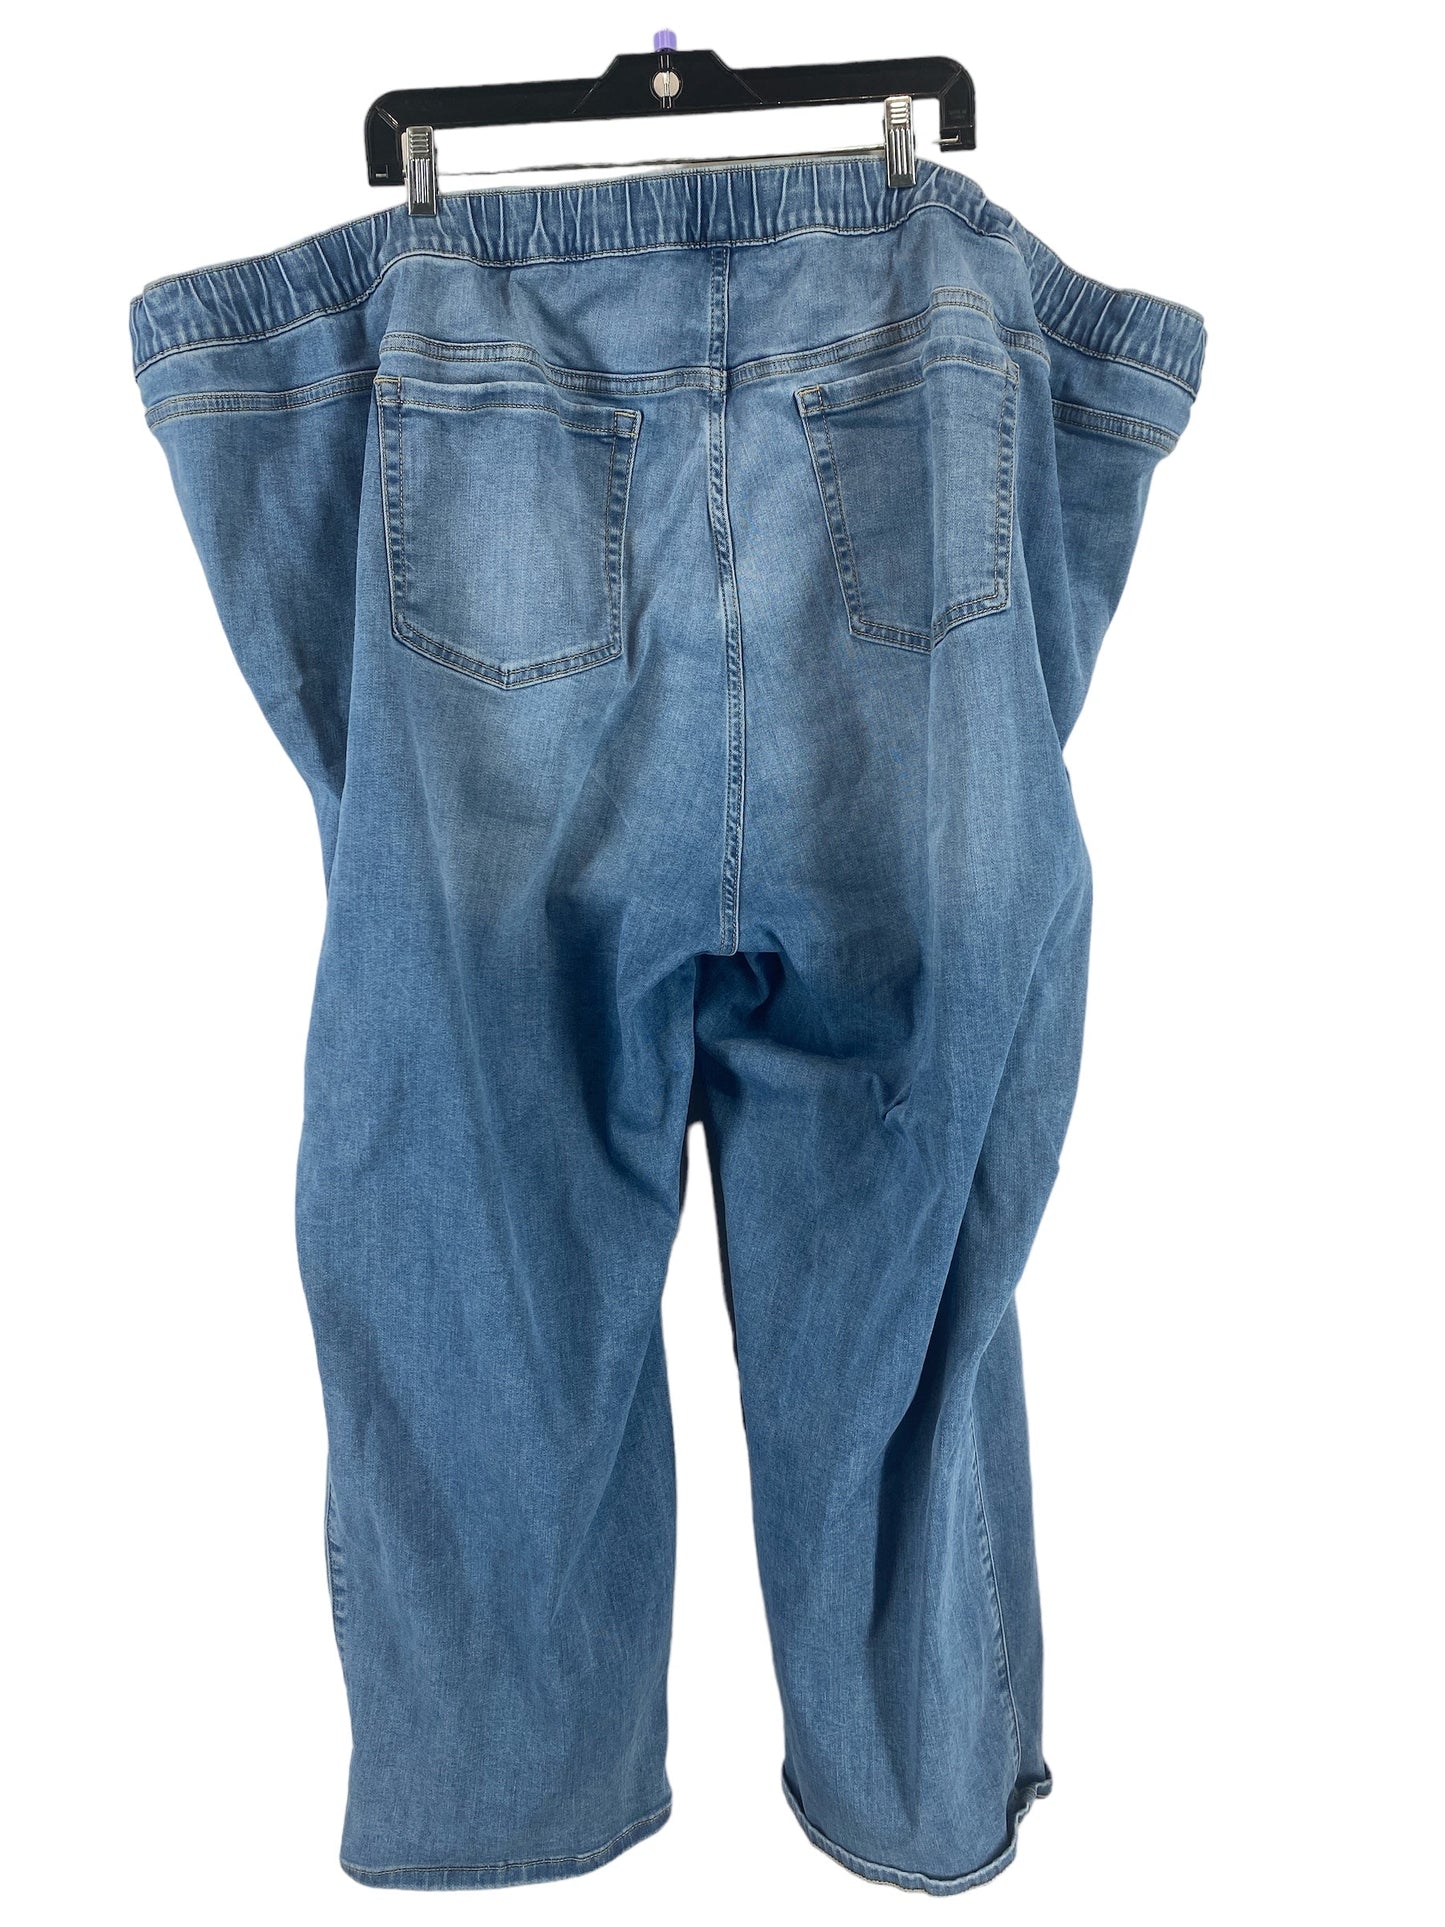 Jeans Skinny By Torrid  Size: 6